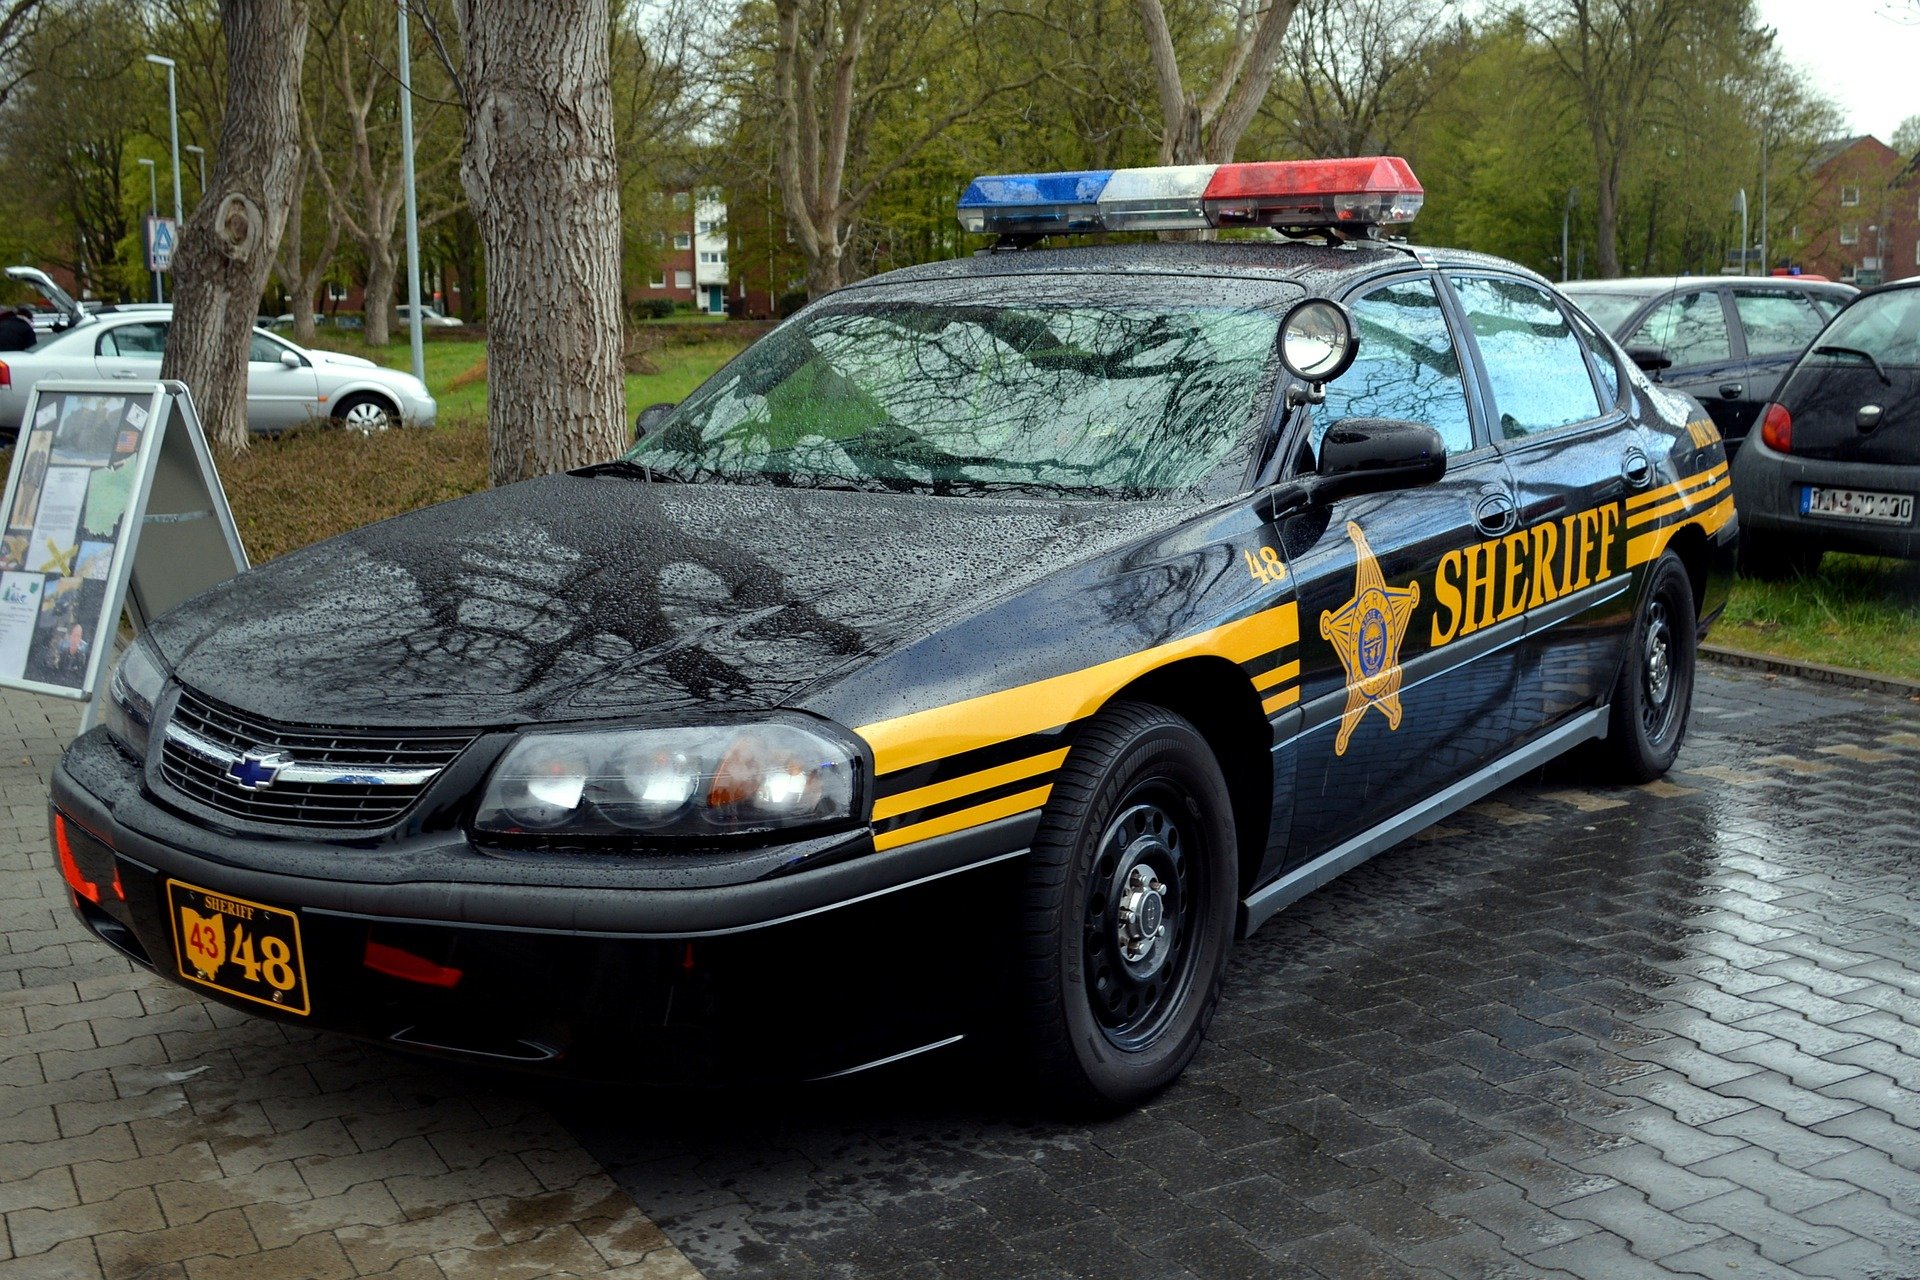 A parked Sheriff's police vehicle | Photo: Pixabay 